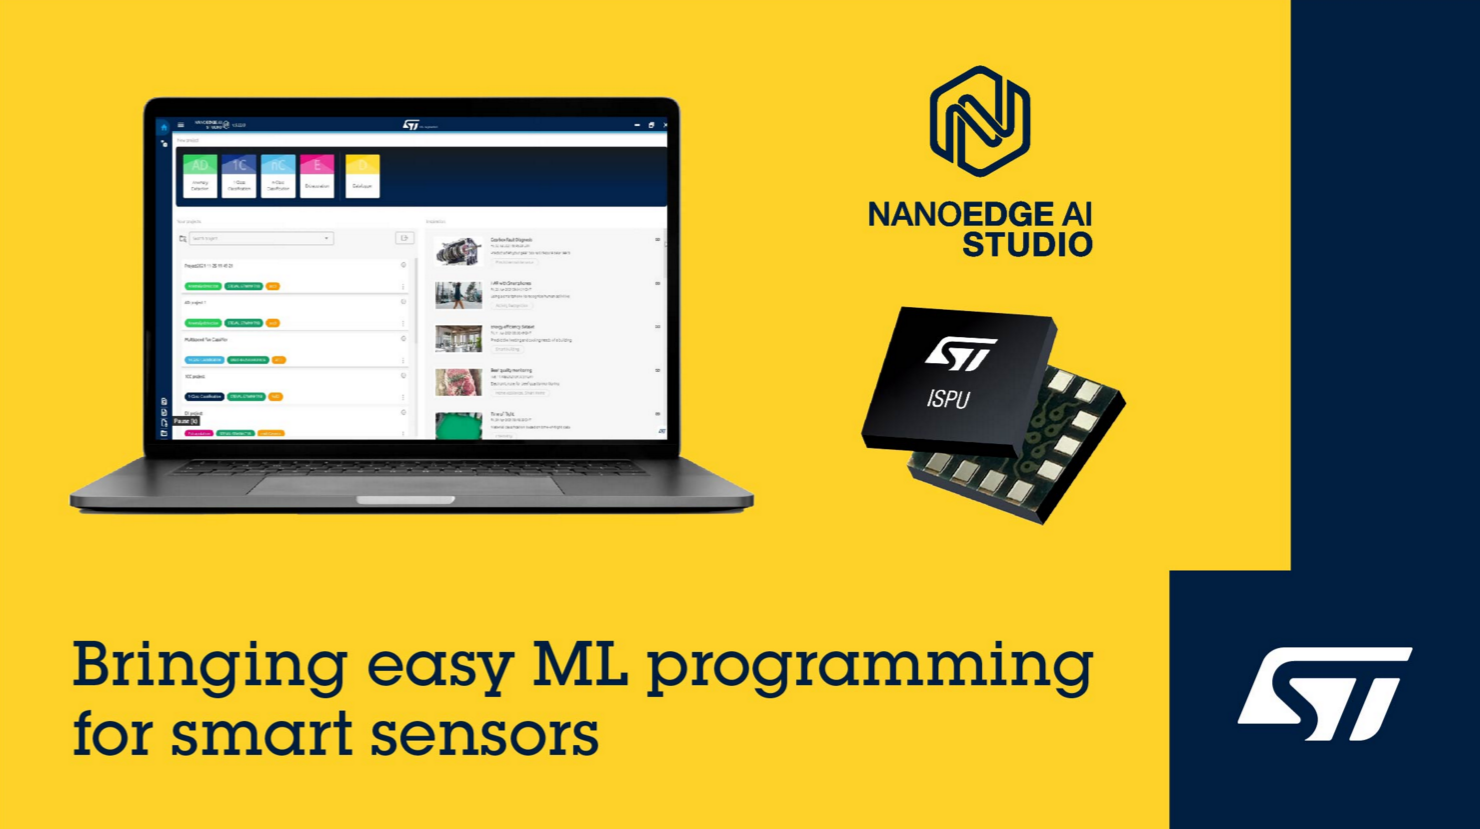 意法半導體NanoEdge AI Studio更新，支持智能傳感器上的設備端學習和診斷